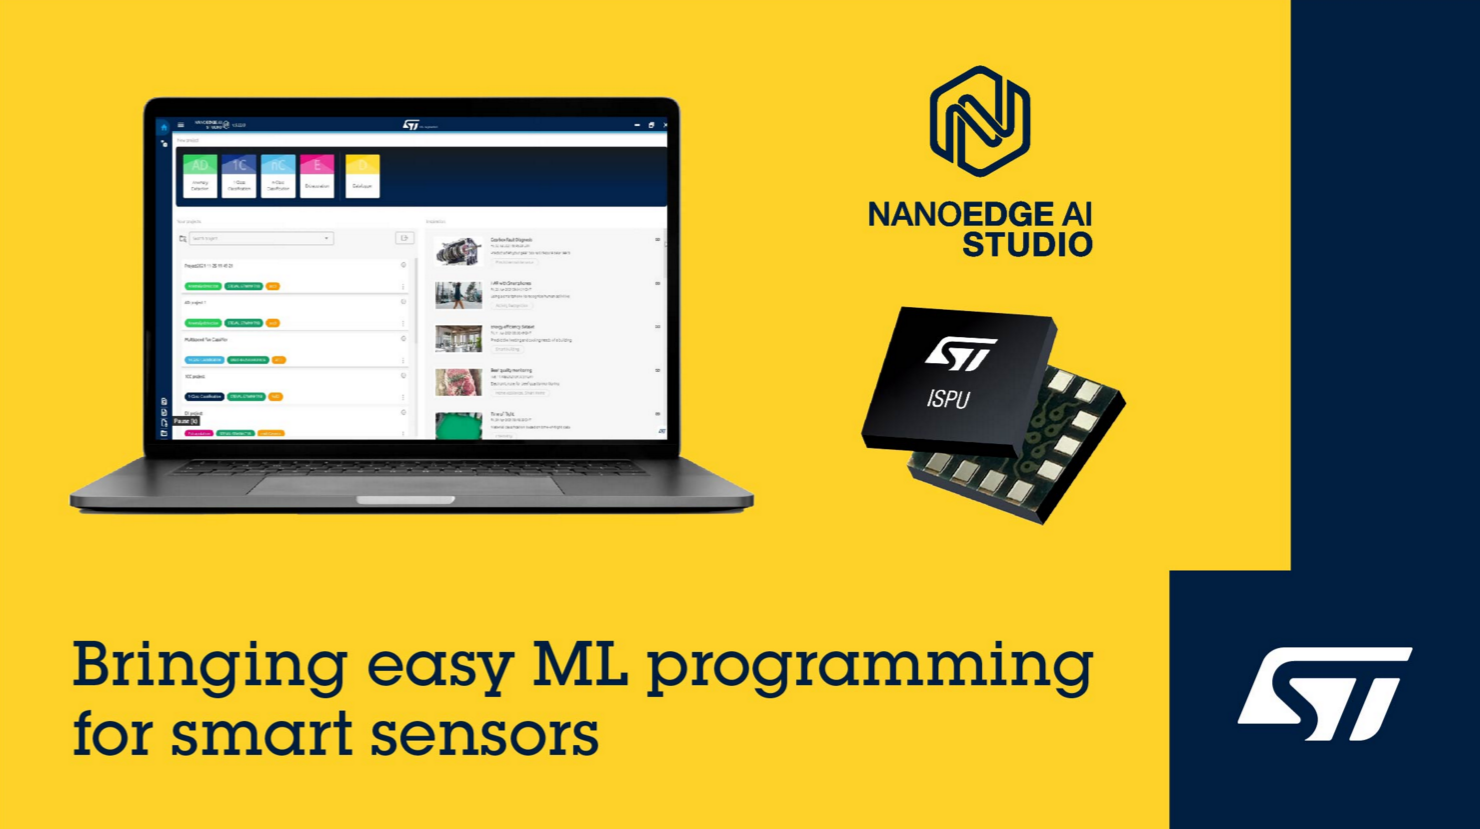 意法半導體NanoEdge AI Studio更新，支持智能傳感器上的設備端學習和診斷